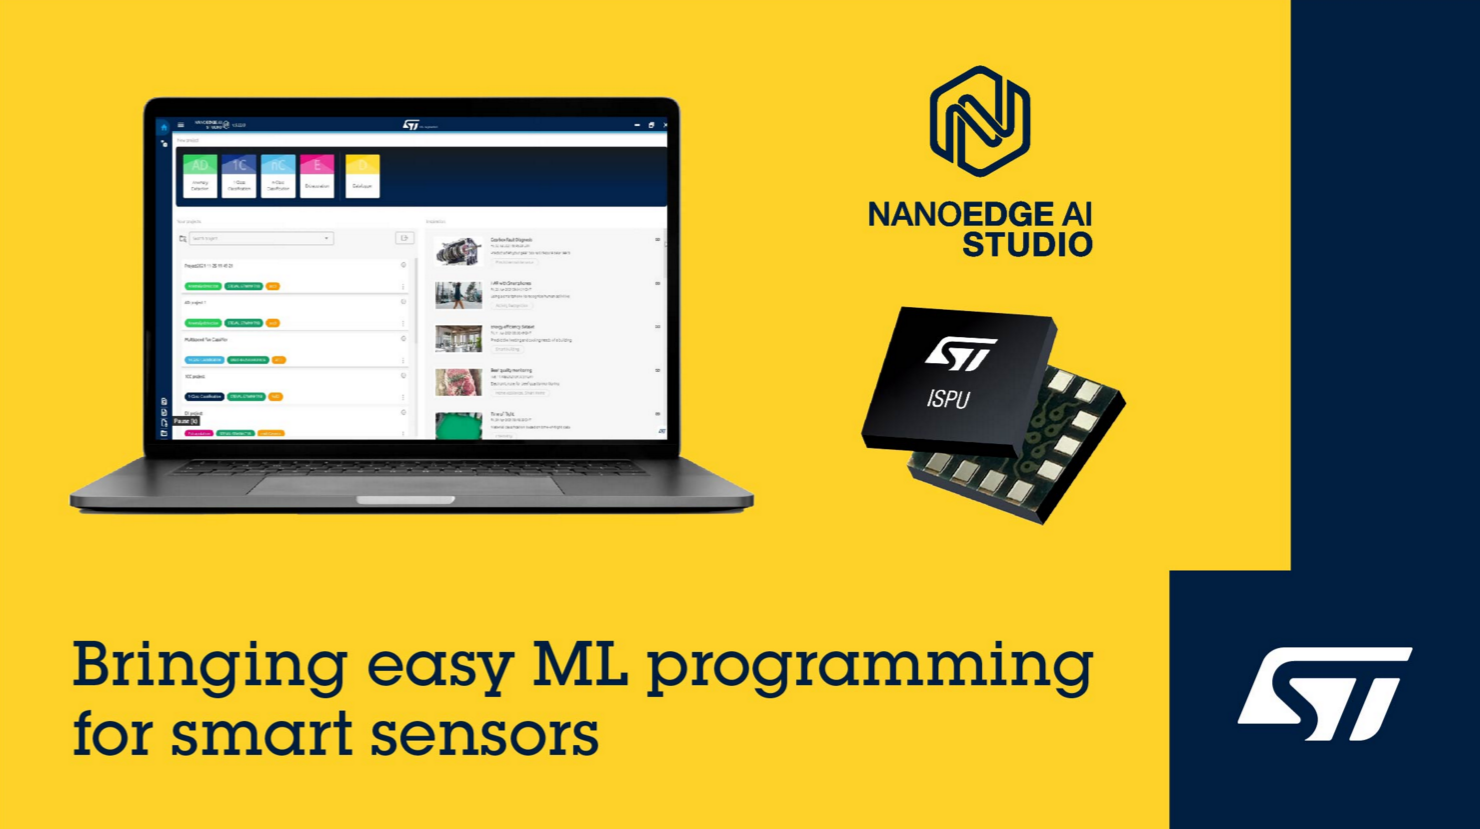 意法半導體NanoEdge AI Studio更新，支持智能傳感器上的設備端學習和診斷